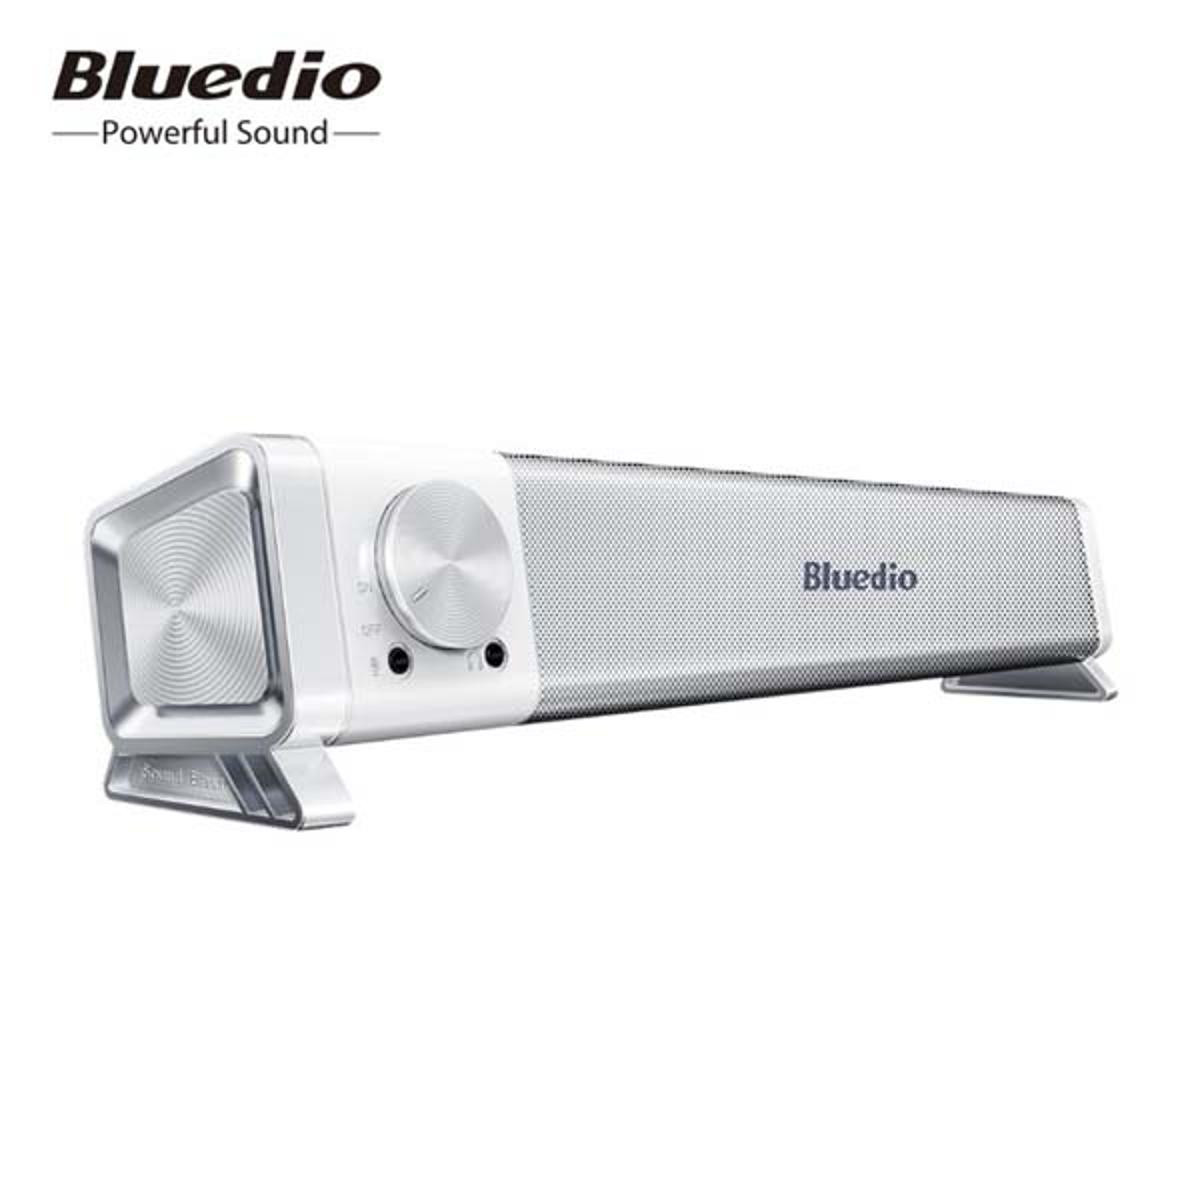 Bluedio LS computer speaker PC soundbar wired speaker USB power column Bluetooth-compatible with mic - Silver